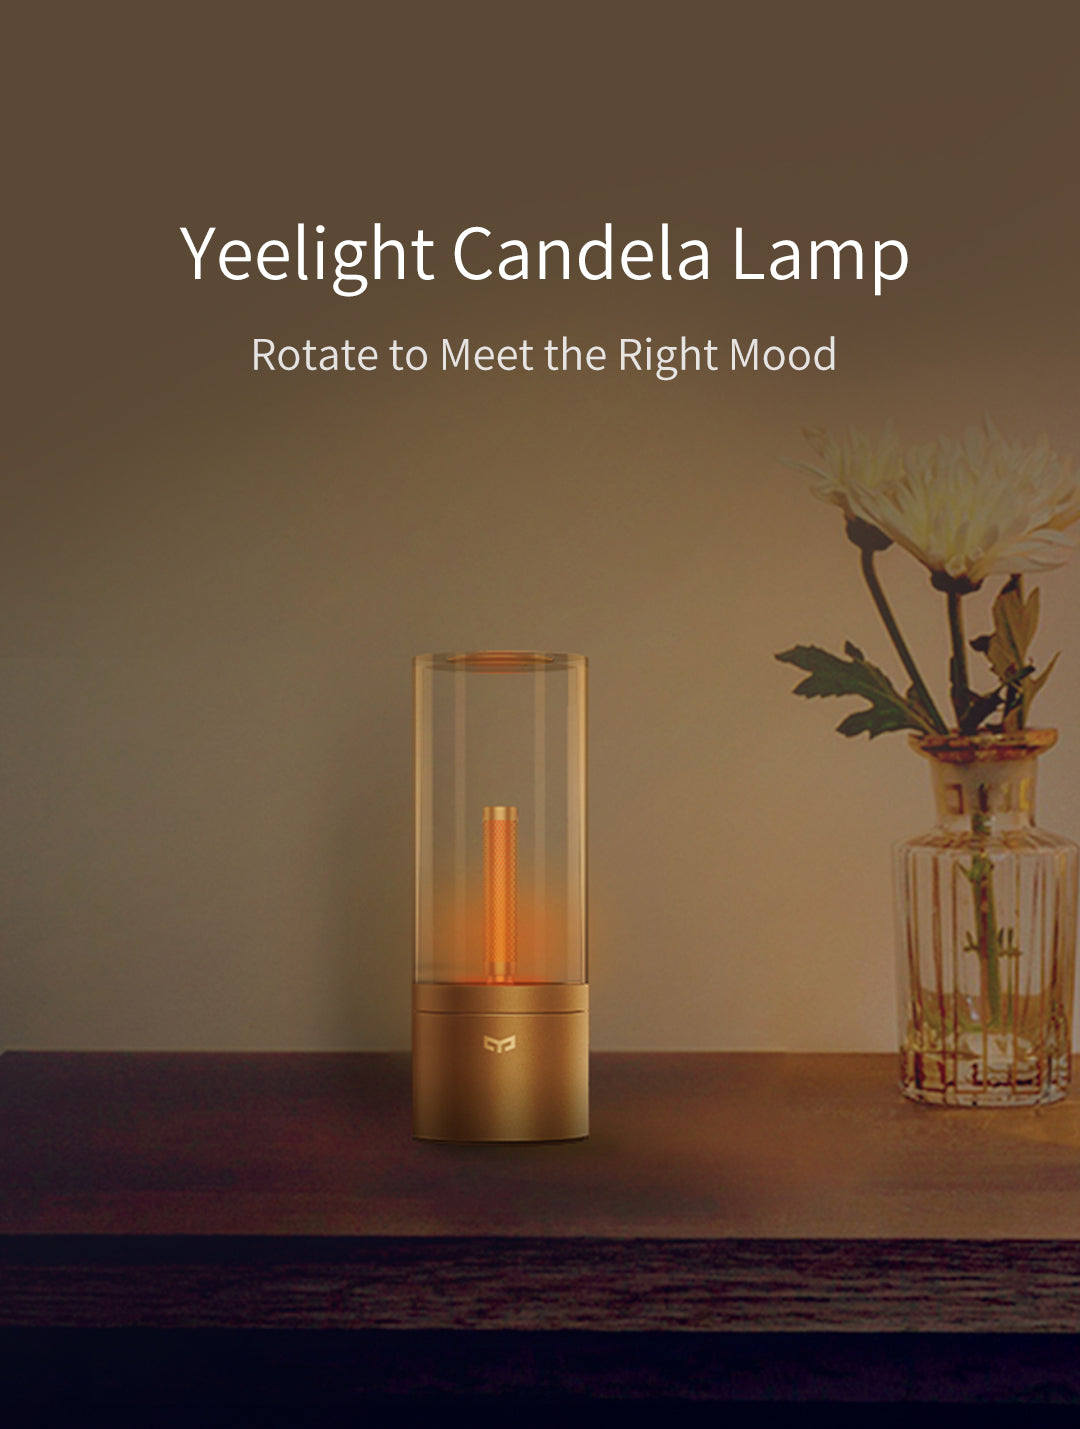 Xiaomi Mijia Yeelight Atmosphere LED Lamp